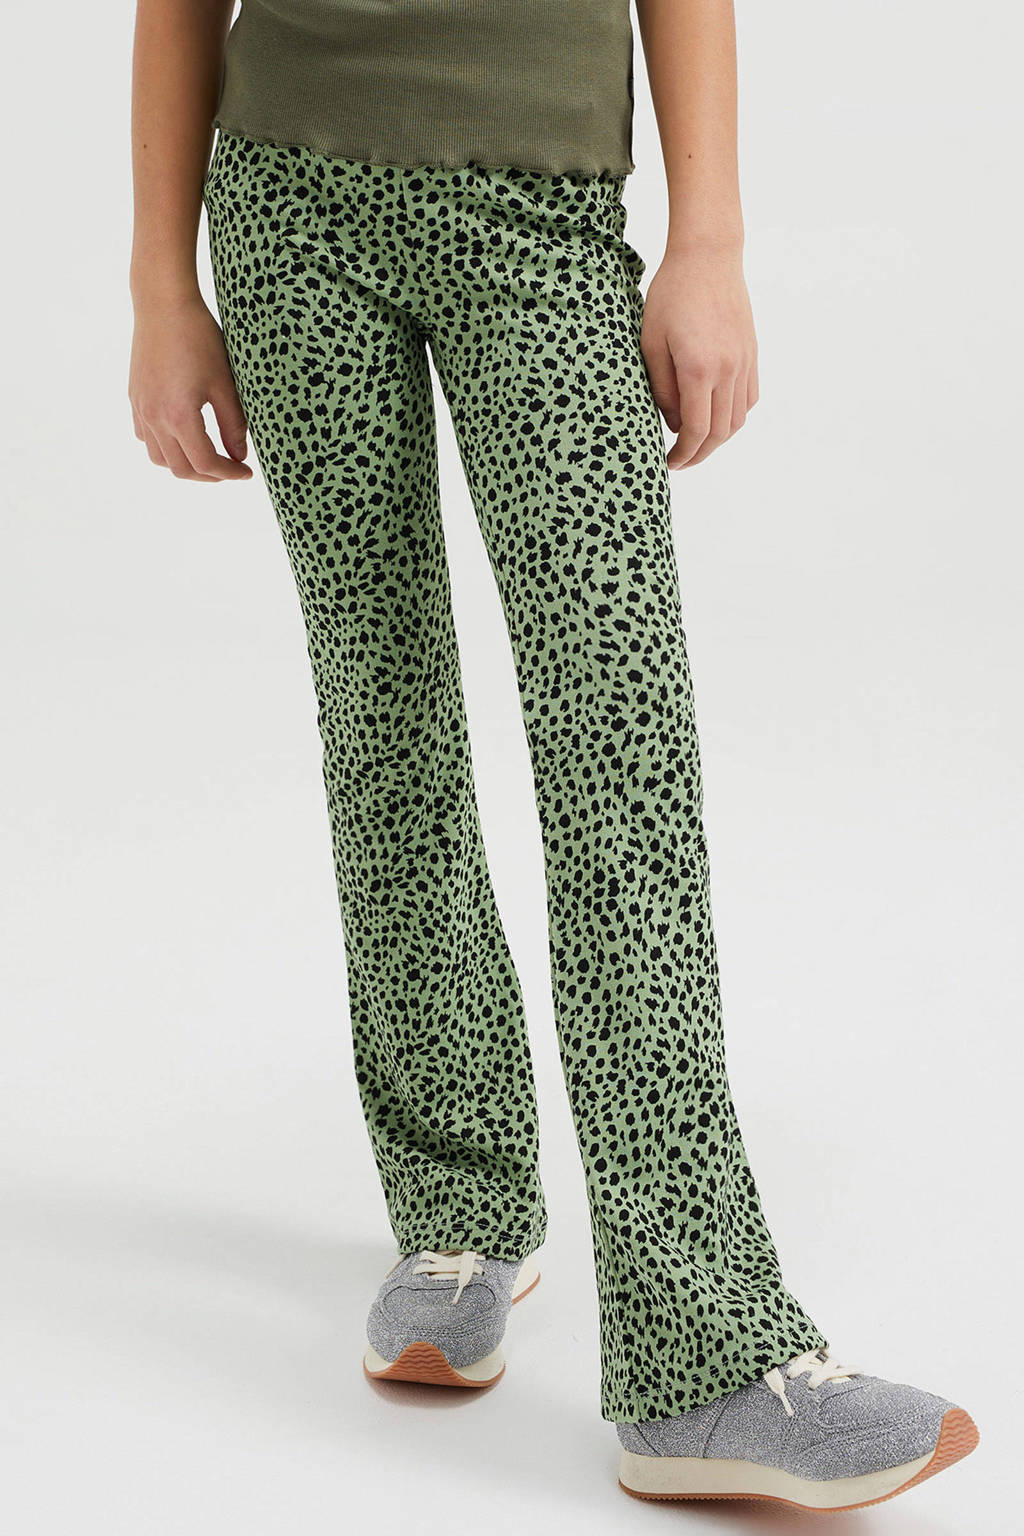 WE Fashion flared broek met dierenprint groen/zwart